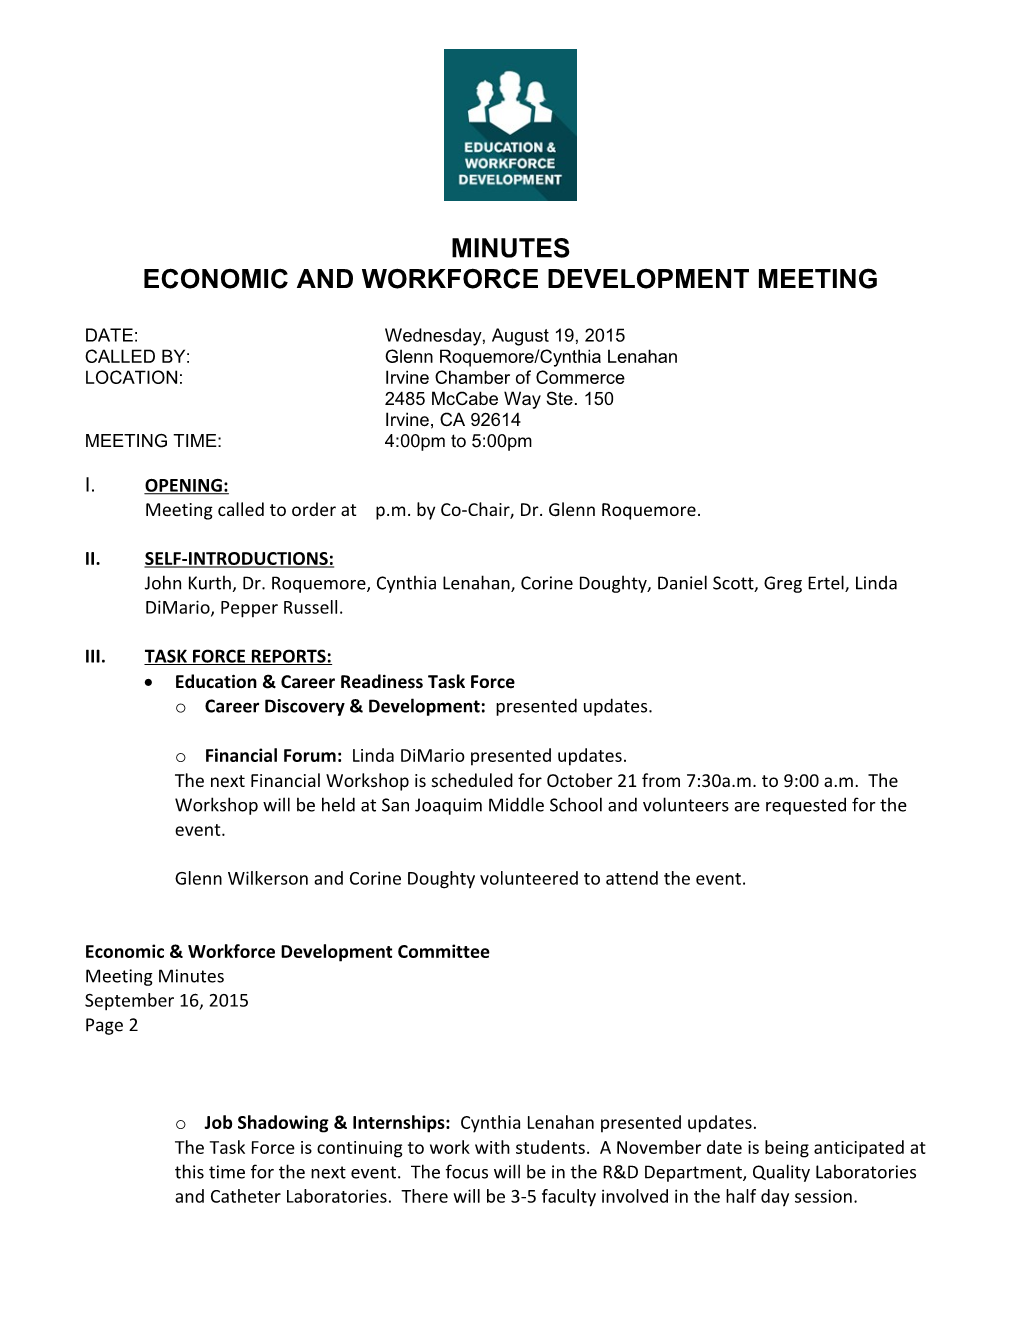 Economic and Workforce Development Meeting